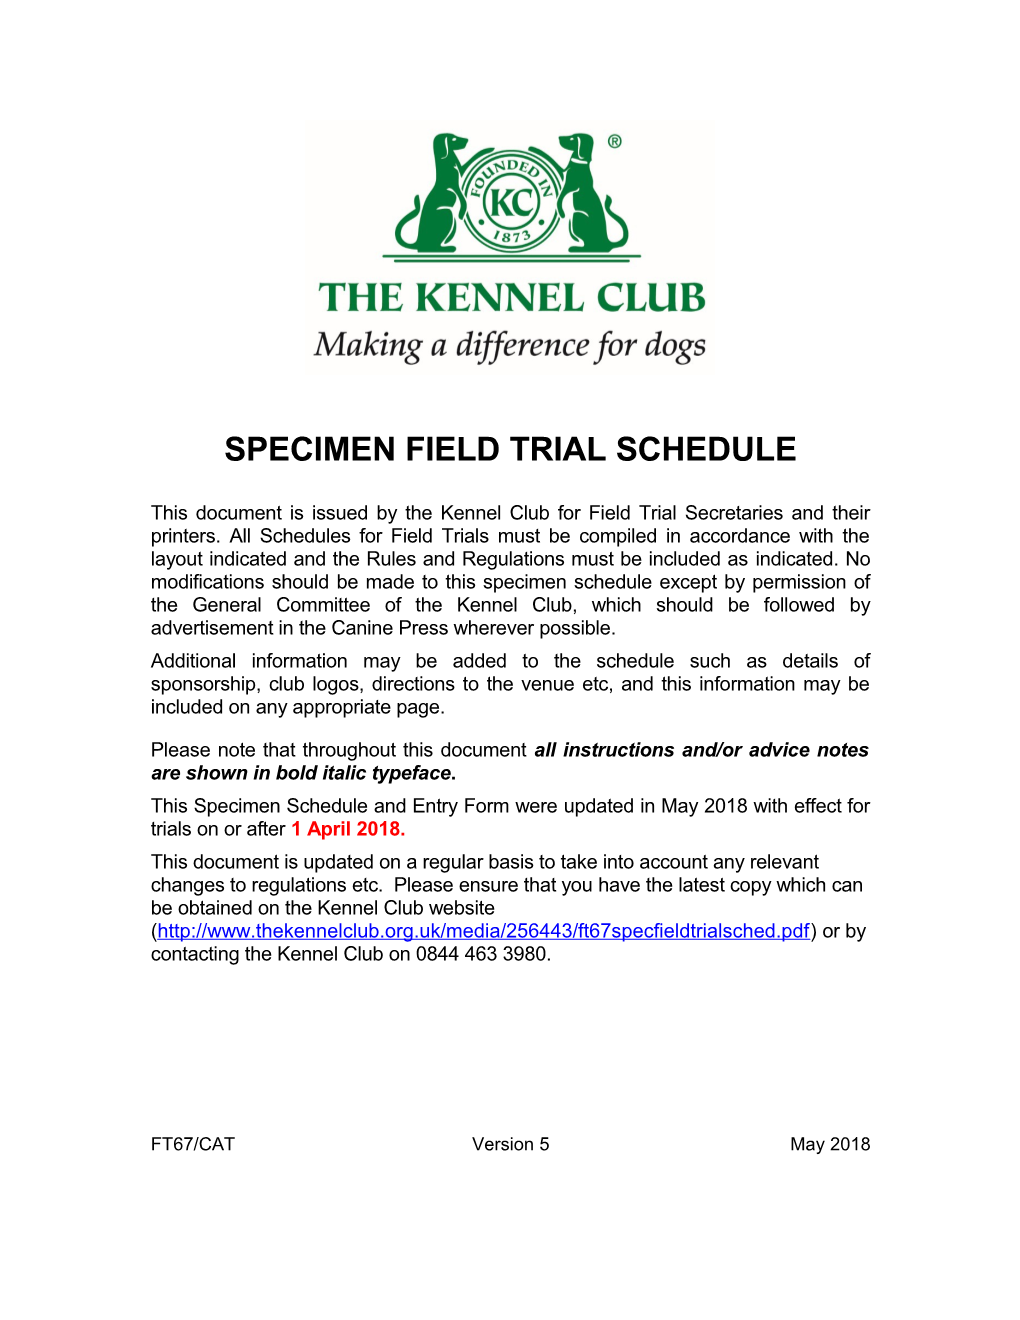 Specimen Field Trial Schedule